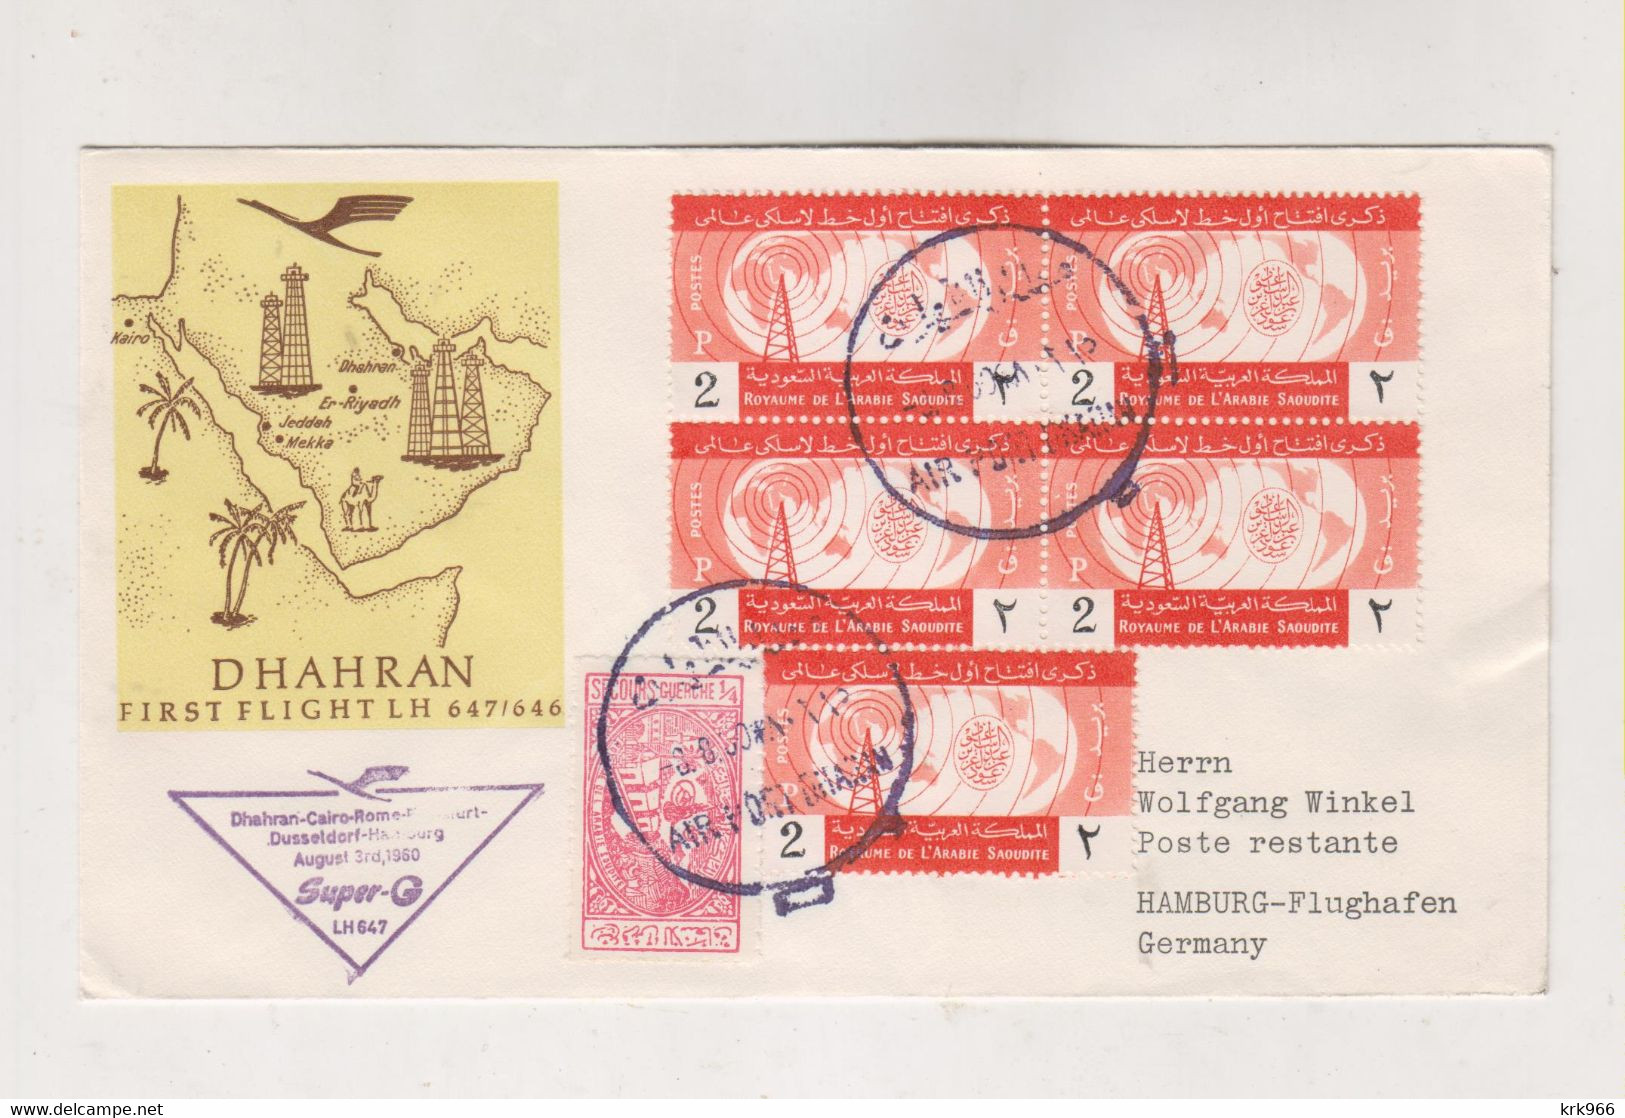 SAUDI ARABIA 1960 First Flight Cover DHAHRAN -CAIRO-ROMA-FRANKFURT-DUSSELDORF-HAMBURG - Saudi Arabia